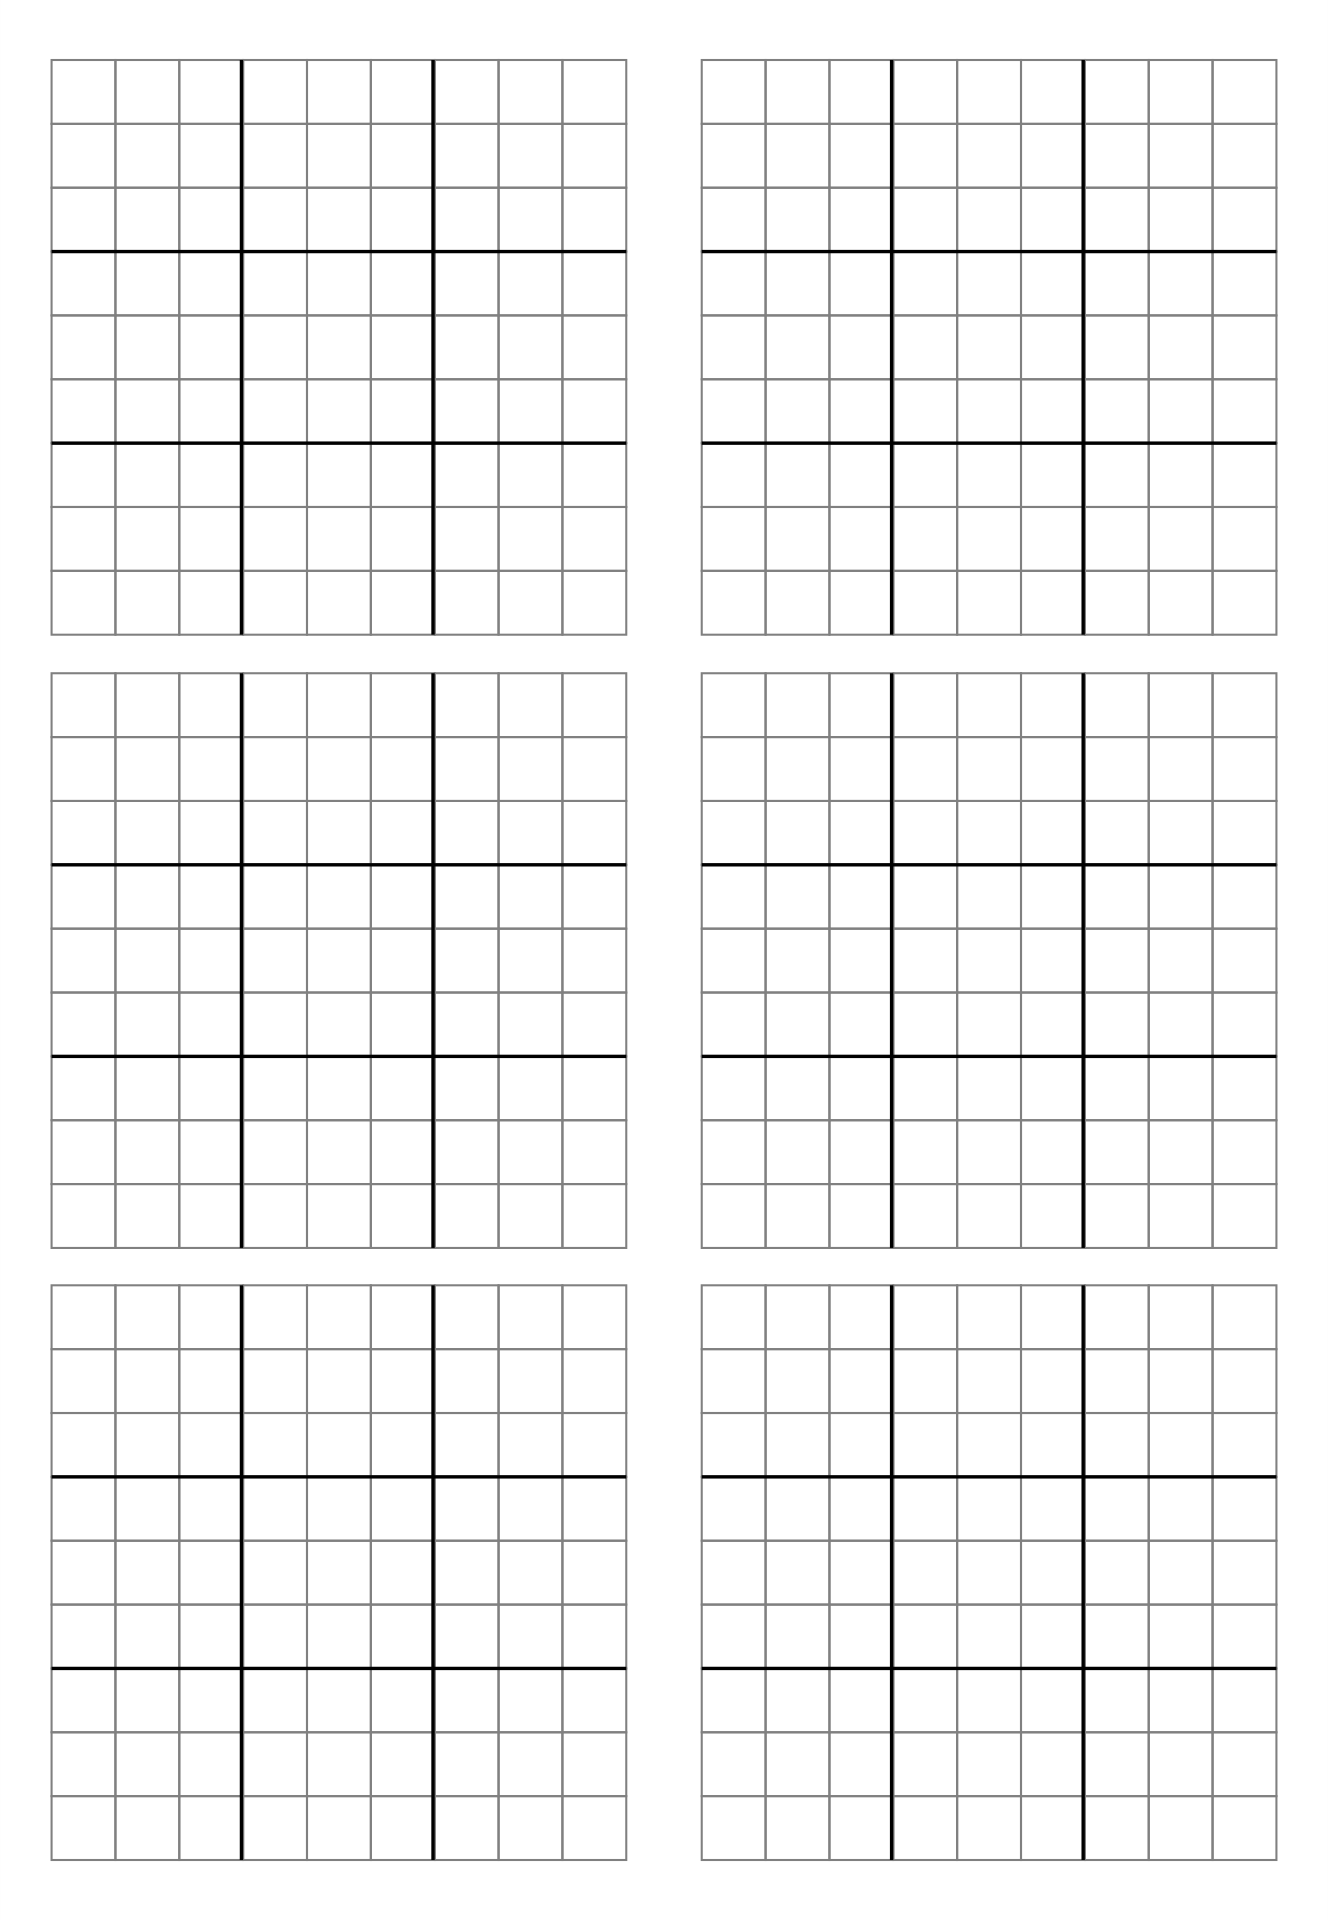 Blank Sudoku Printable Grid